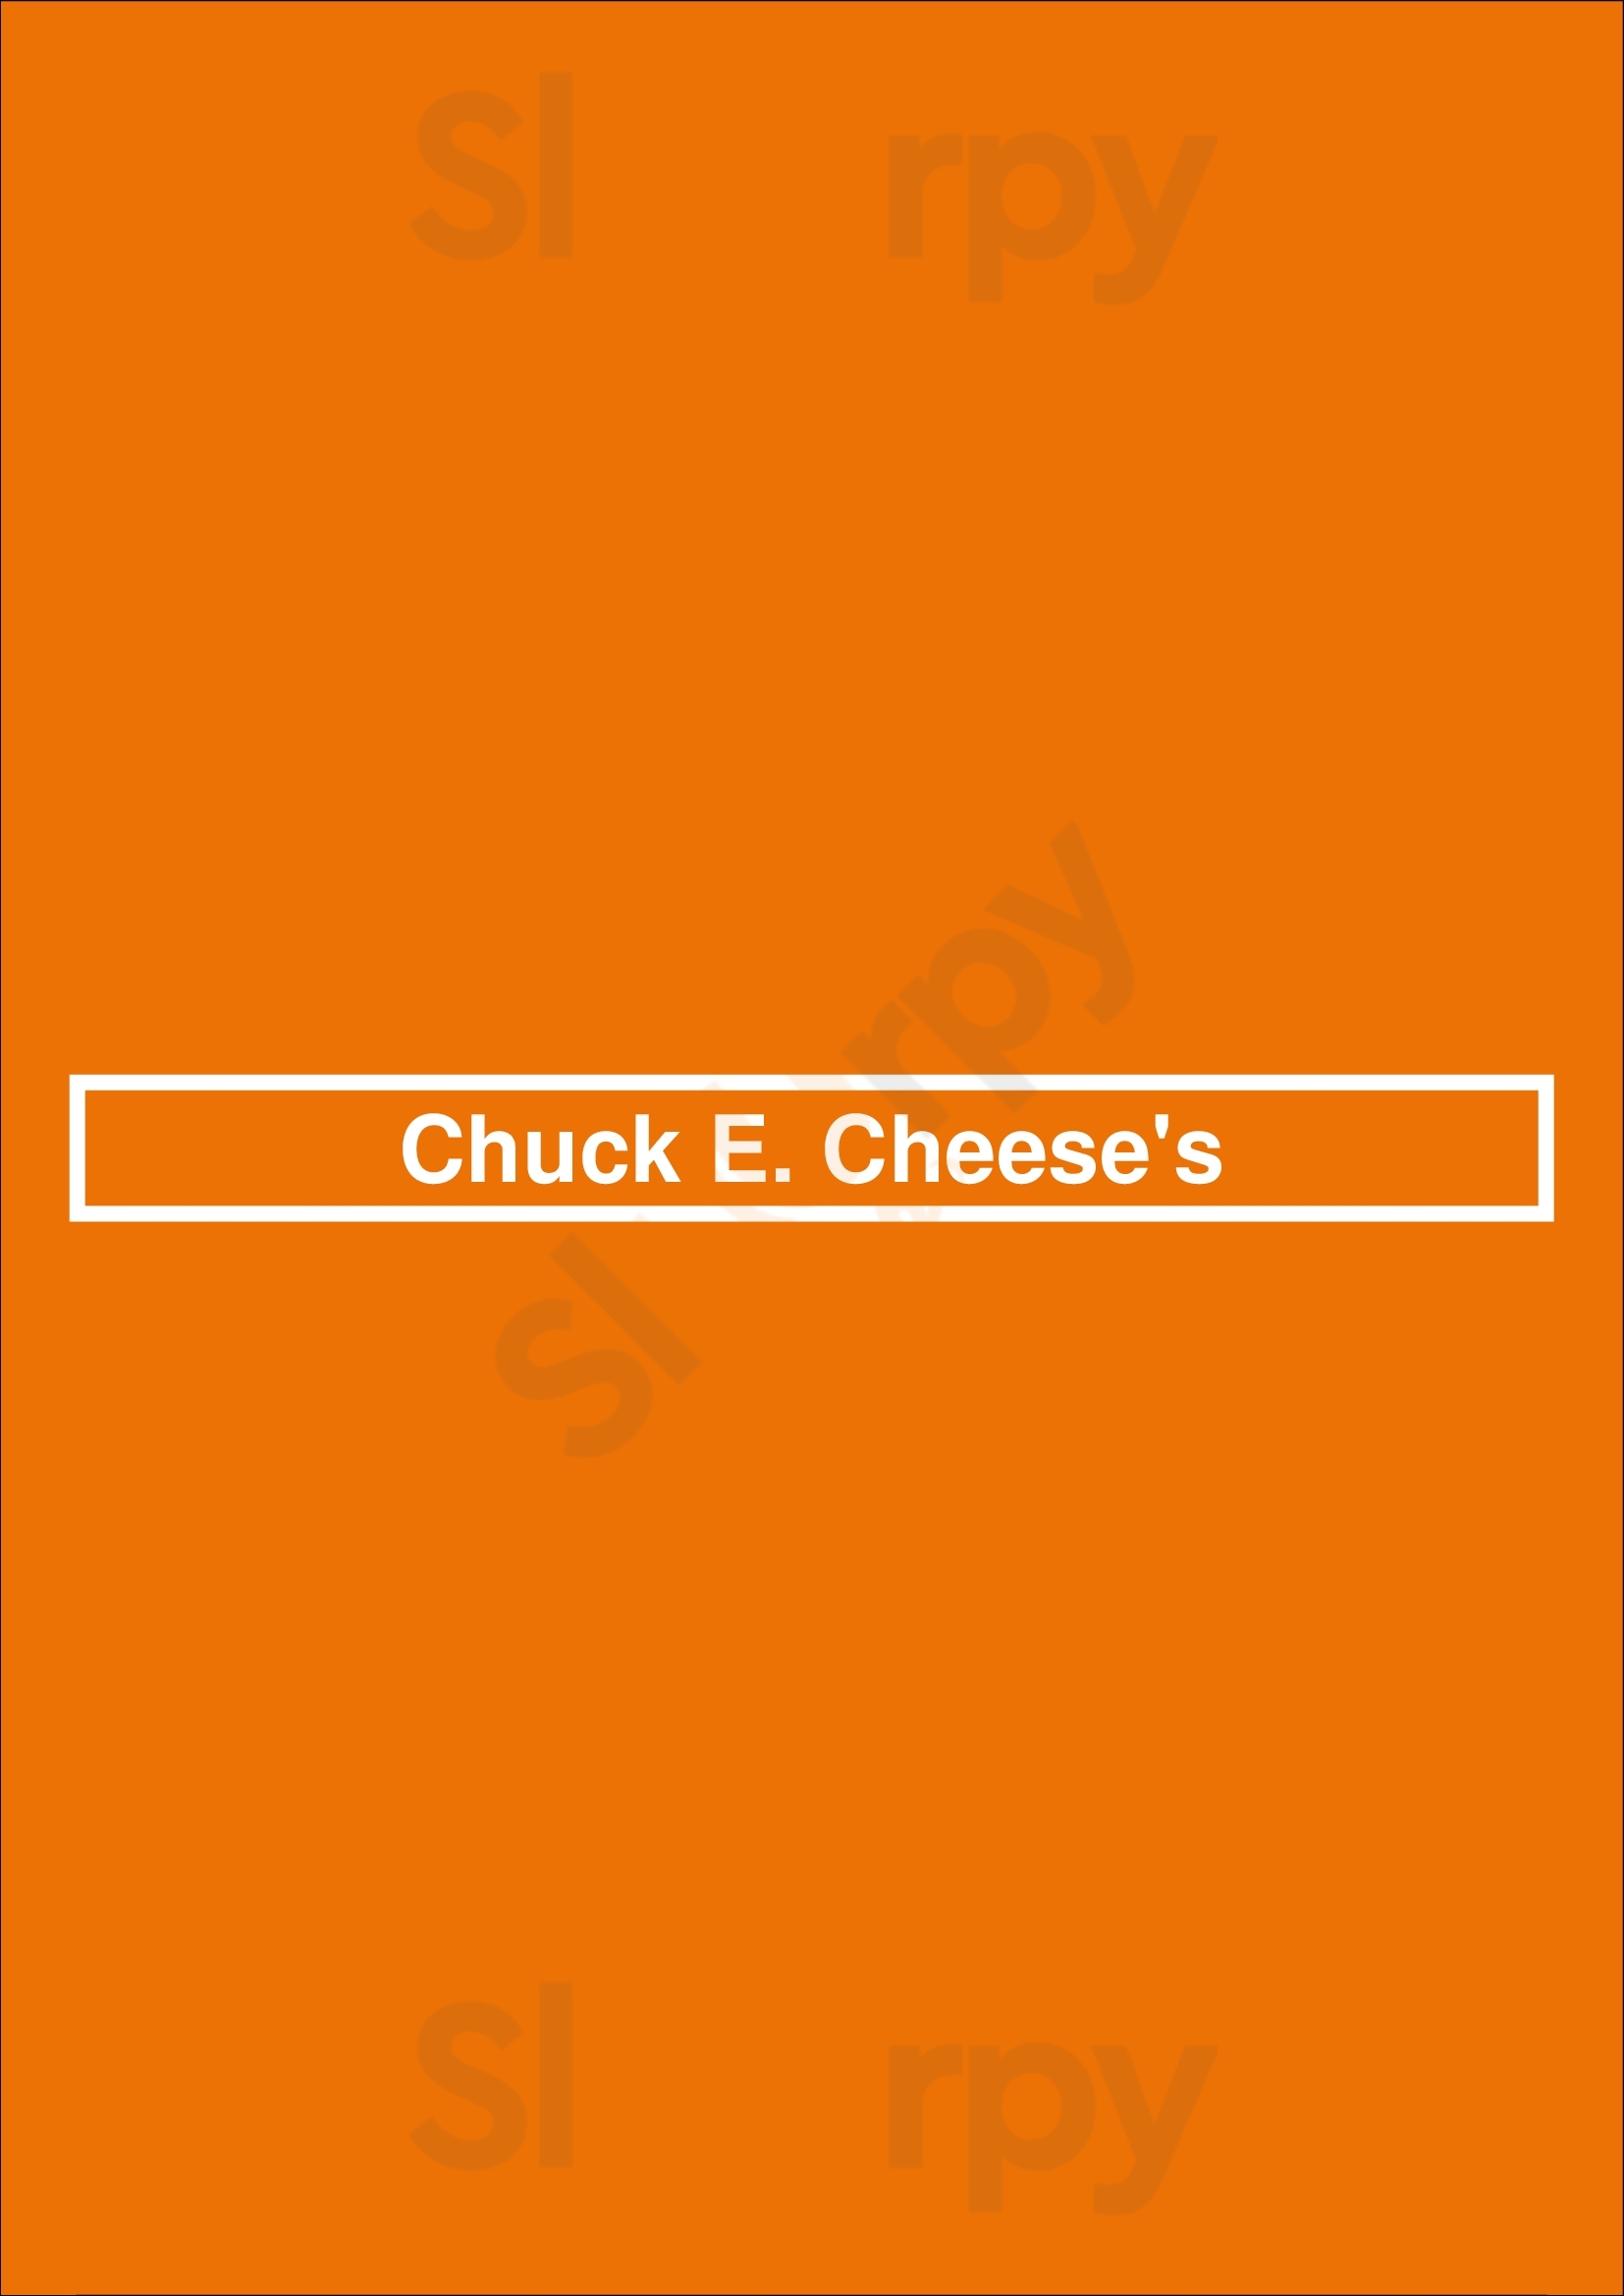 Chuck E. Cheese Cleveland Menu - 1